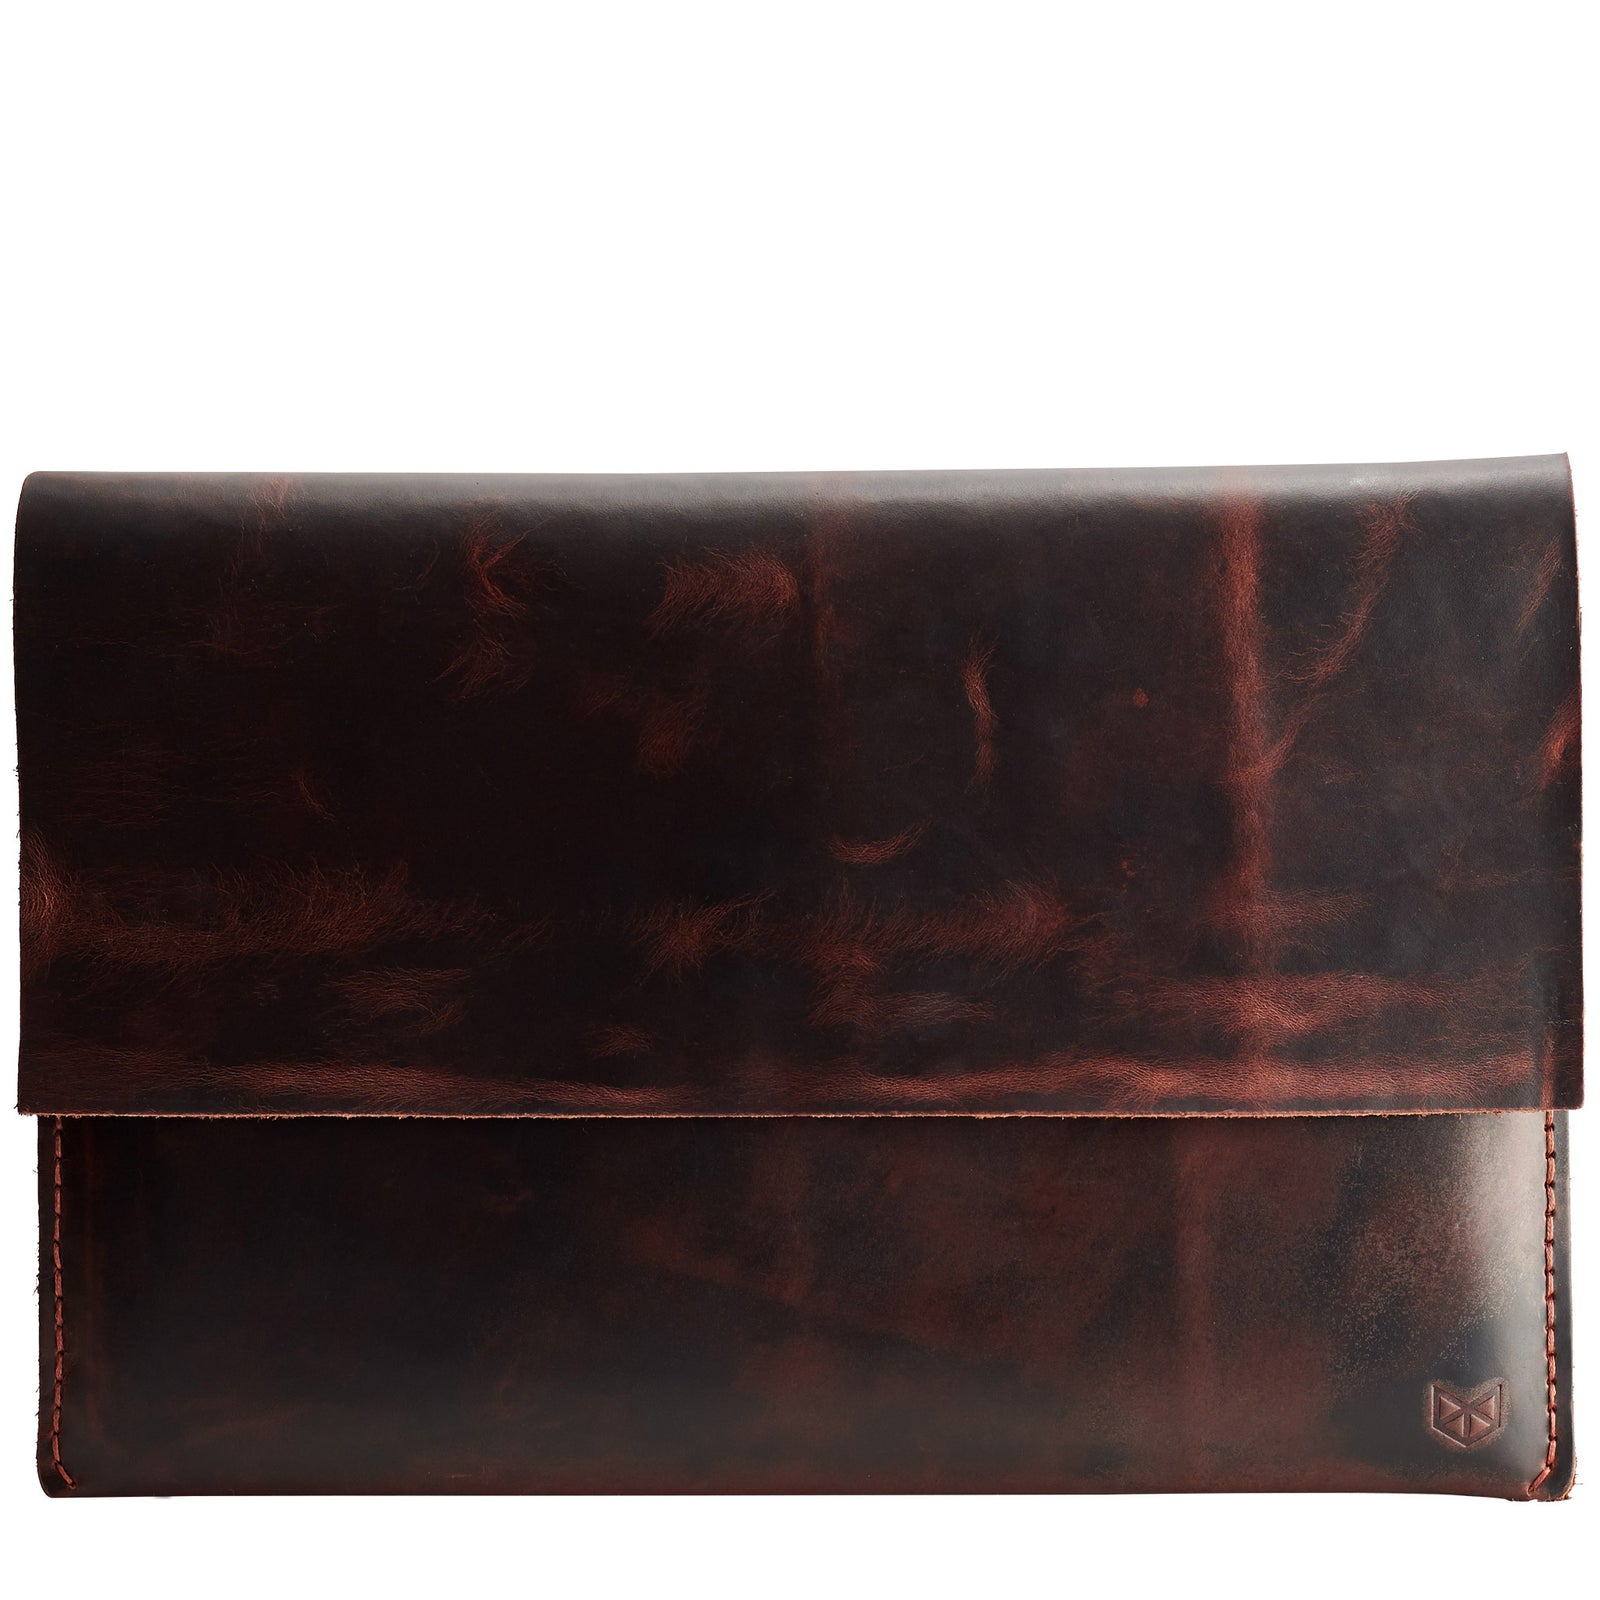 Closed. Distressed Cognac Leather MacBook Case. MacBook Sleeve by Capra Leather